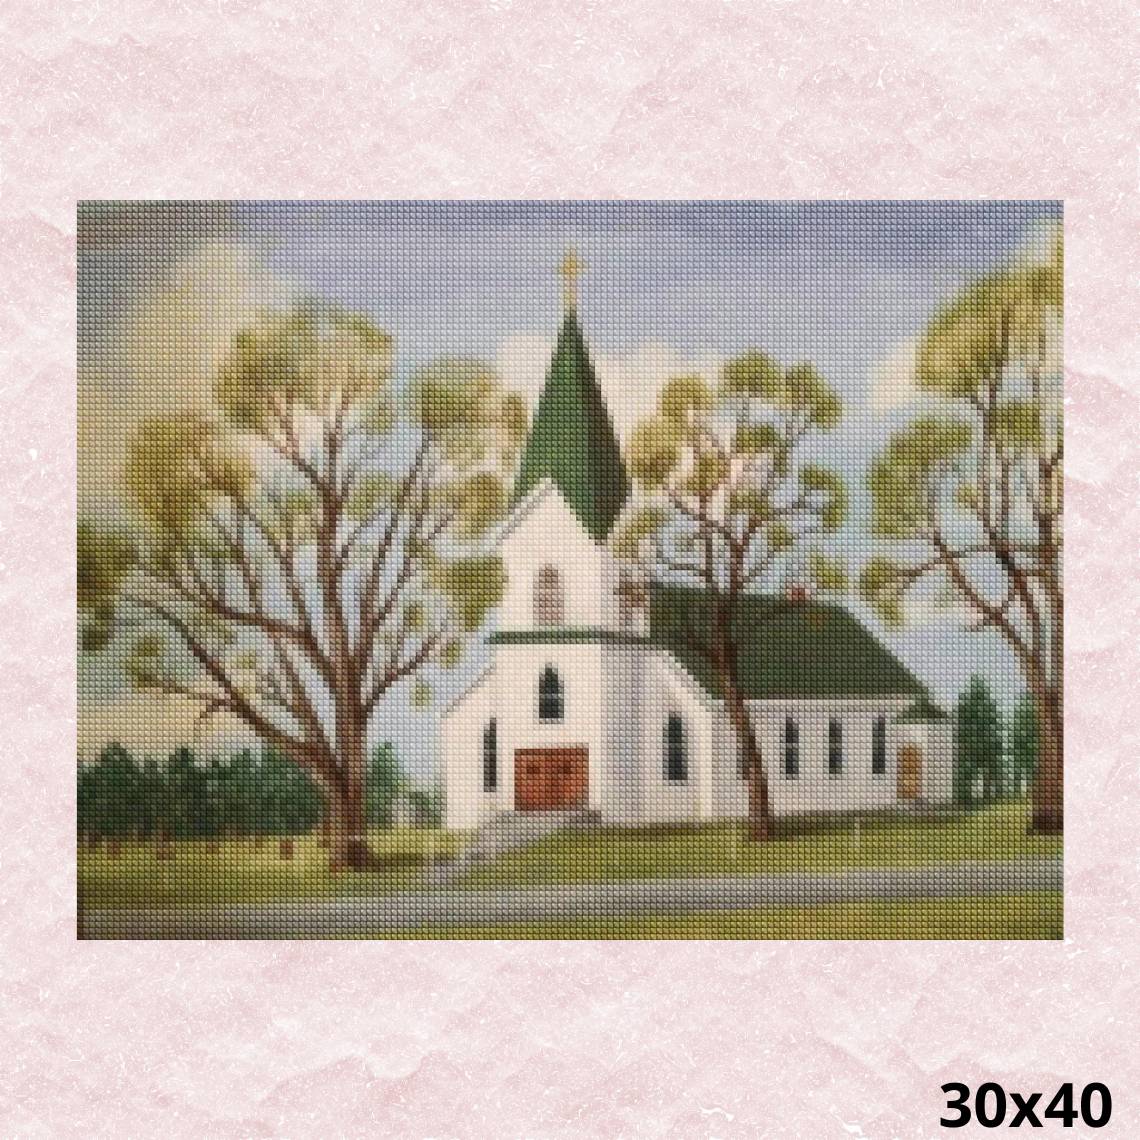 Holy Trinity Church 30x40 - Diamond Painting